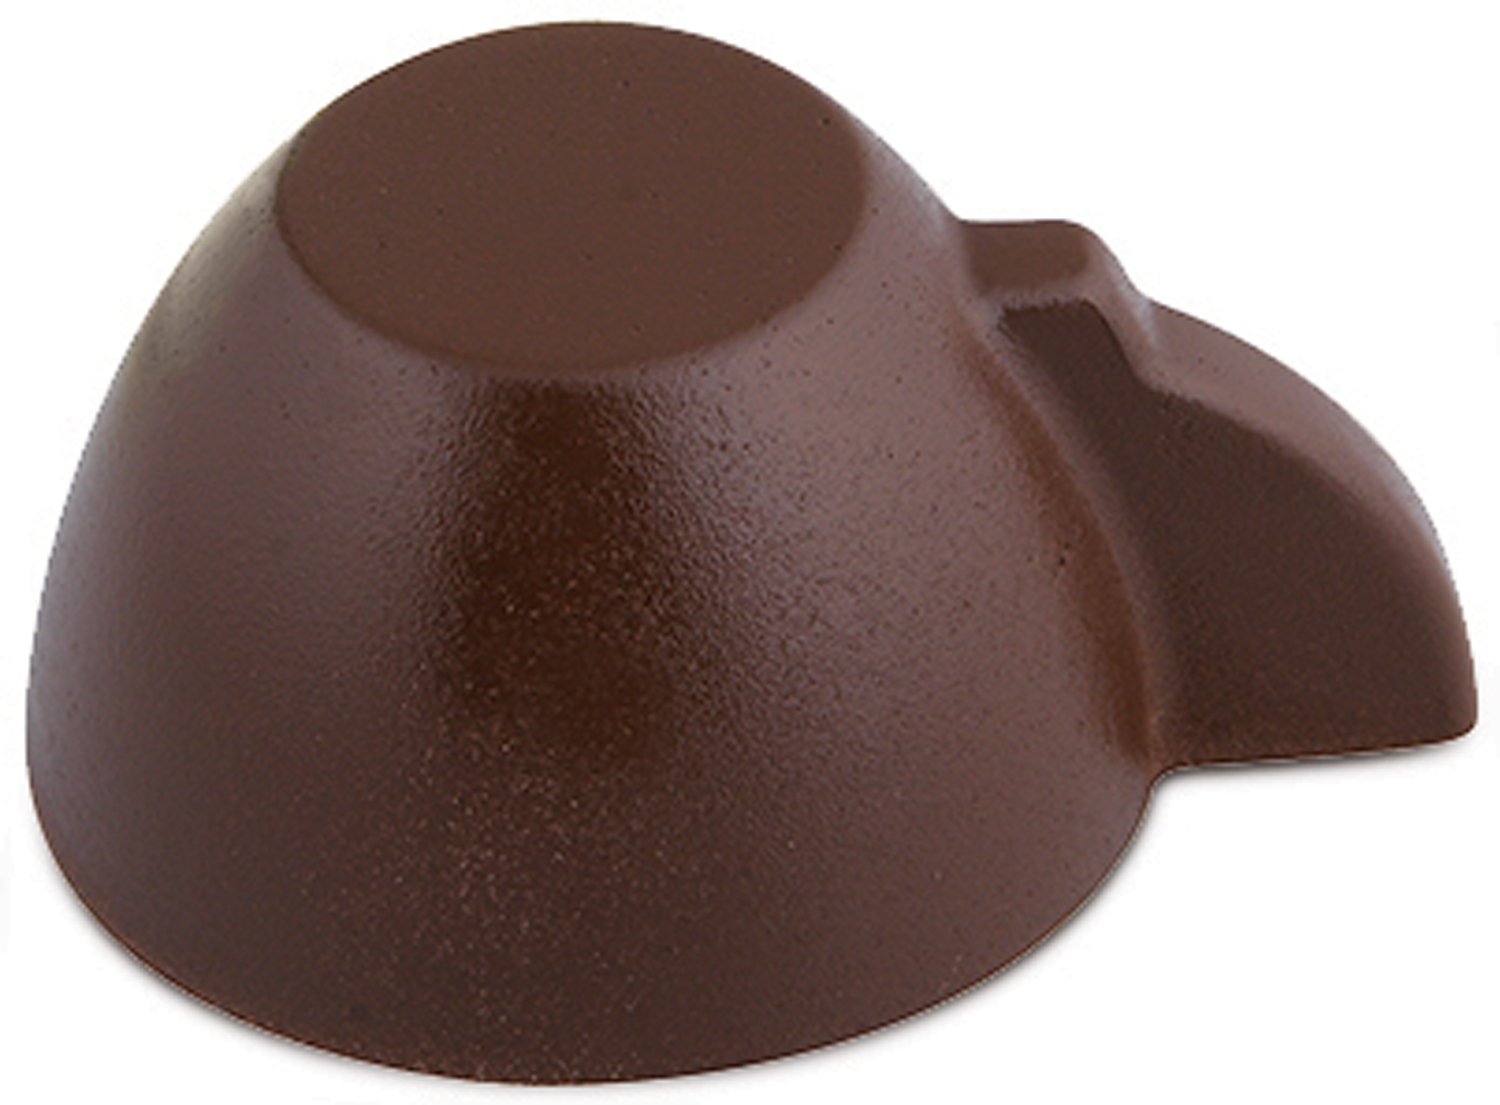 Chocolate Mold - Medium Tea Cup